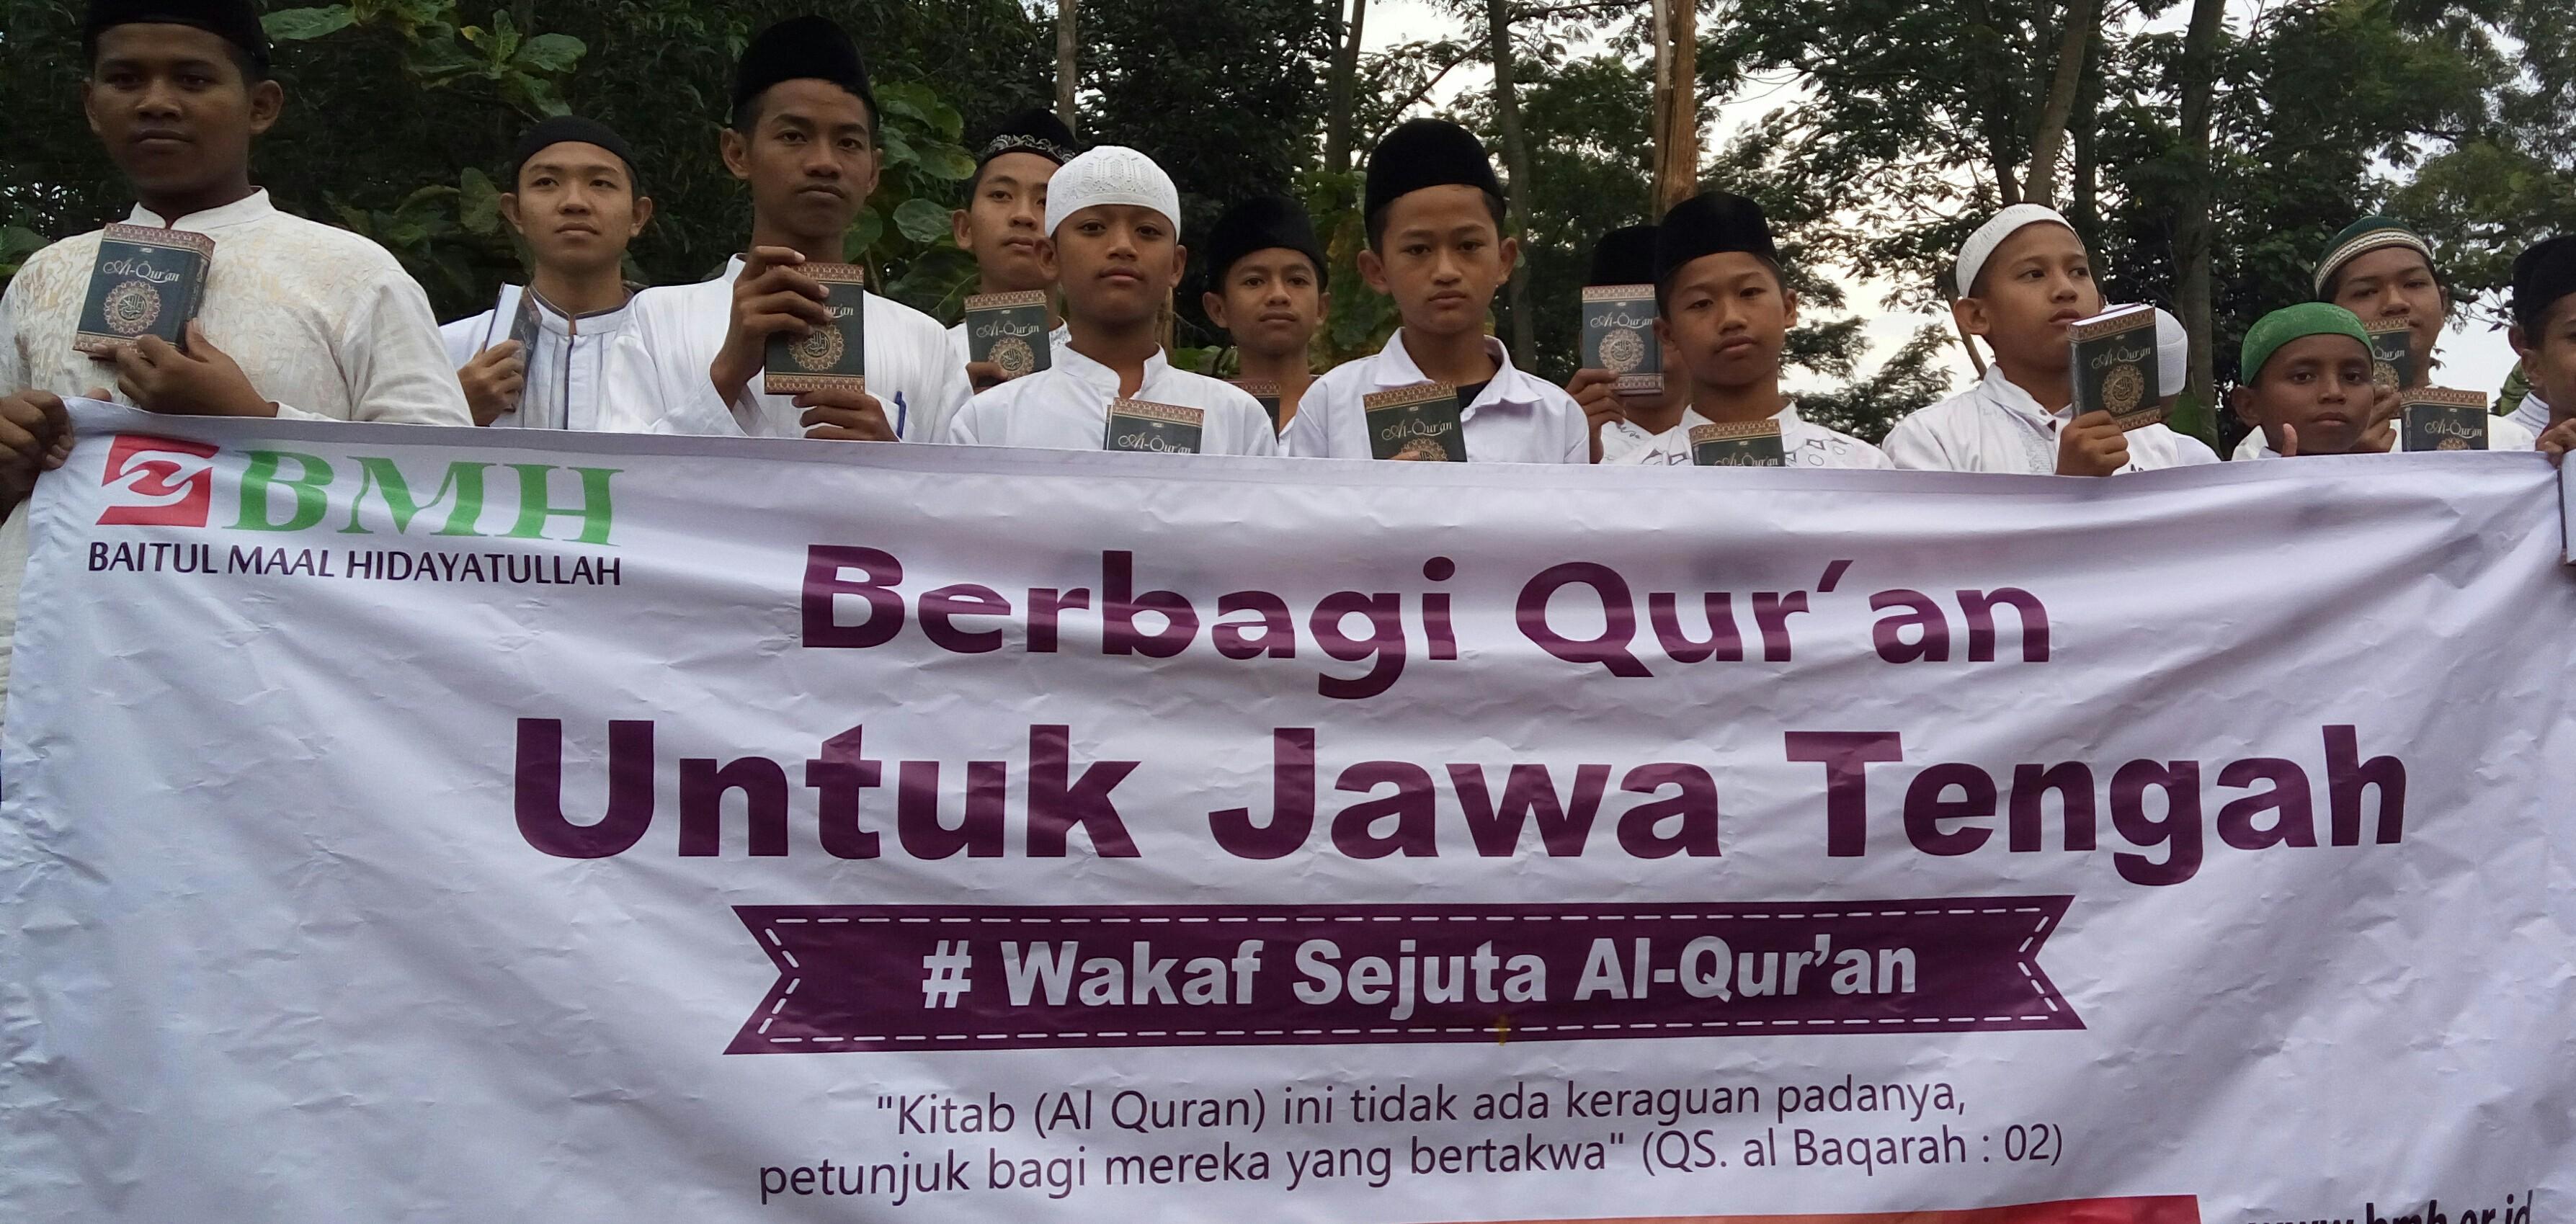 Berbagi Al-Quran untuk Jawa Tengah